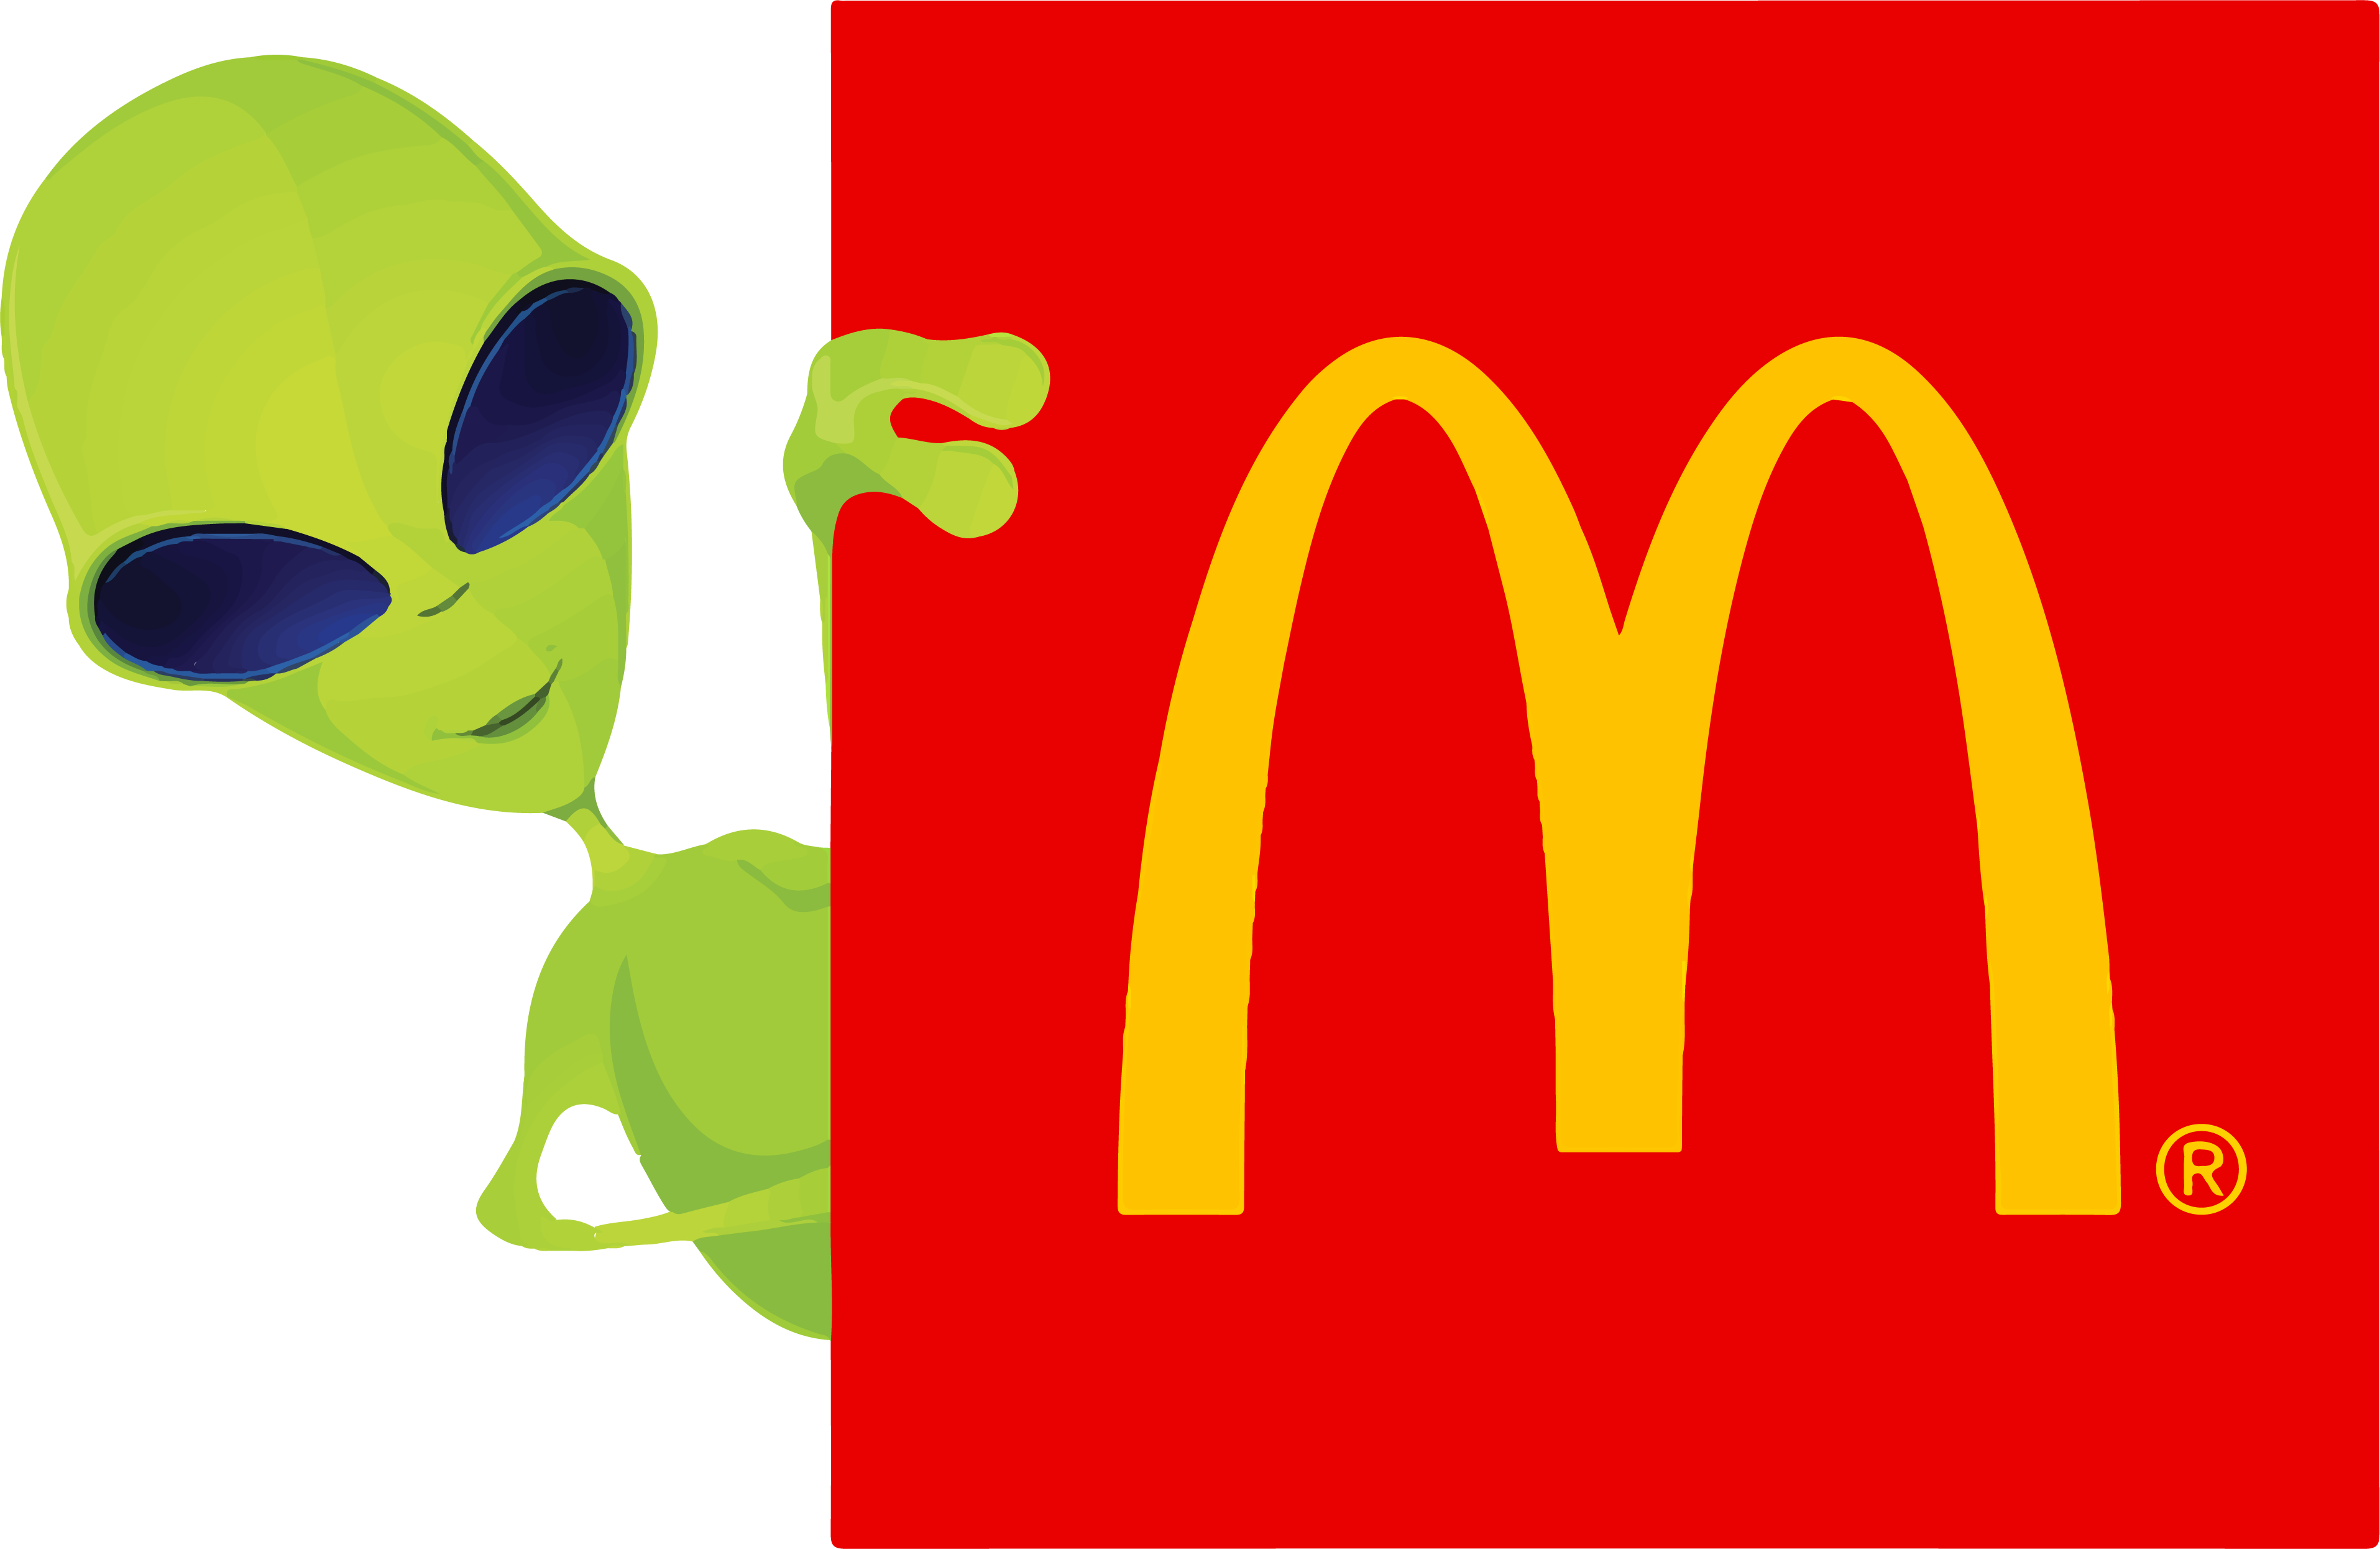 McDonald's Logo with alien